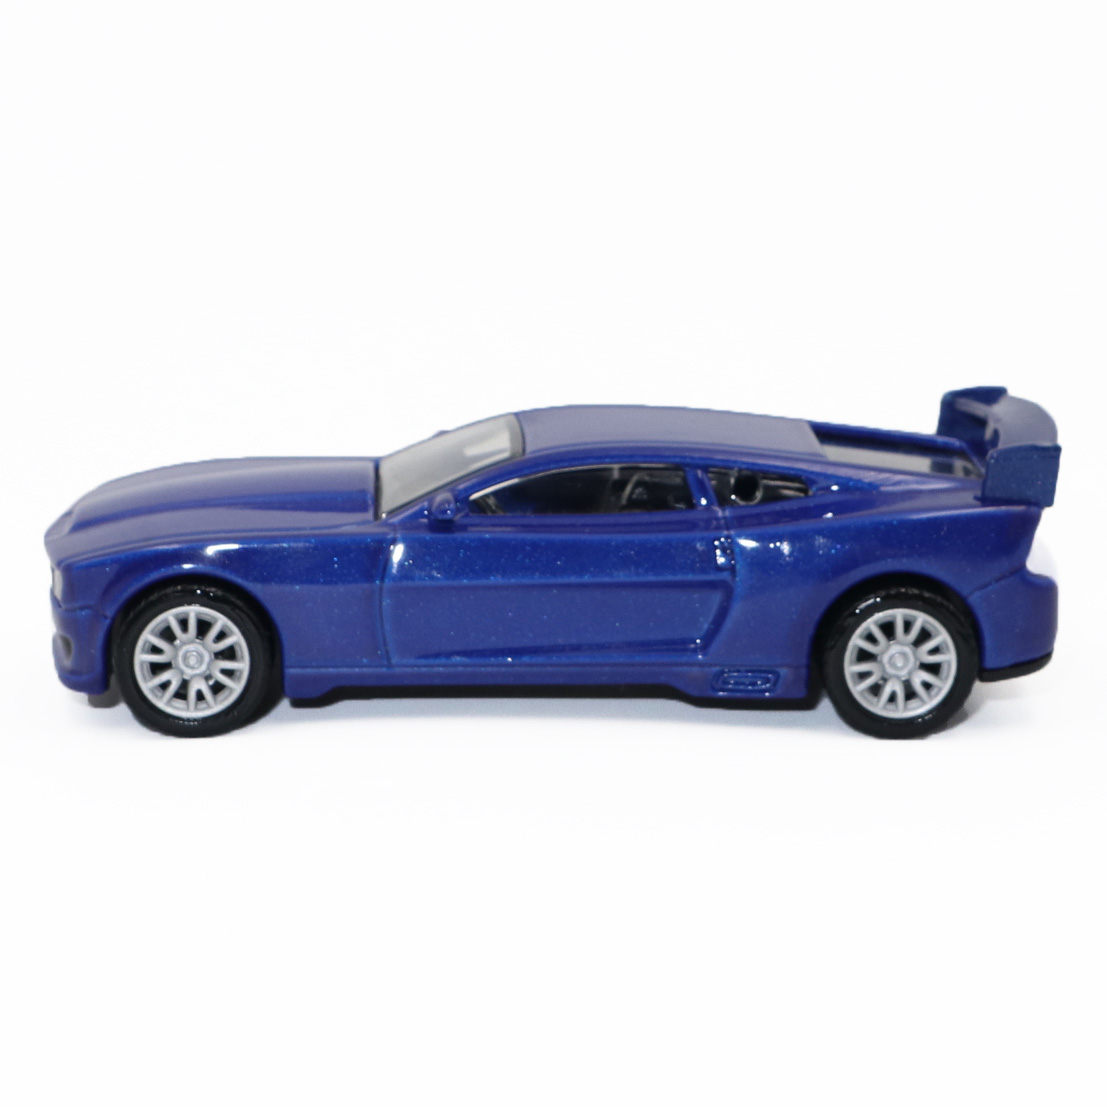 Simulation 1:43 alloy sports car model